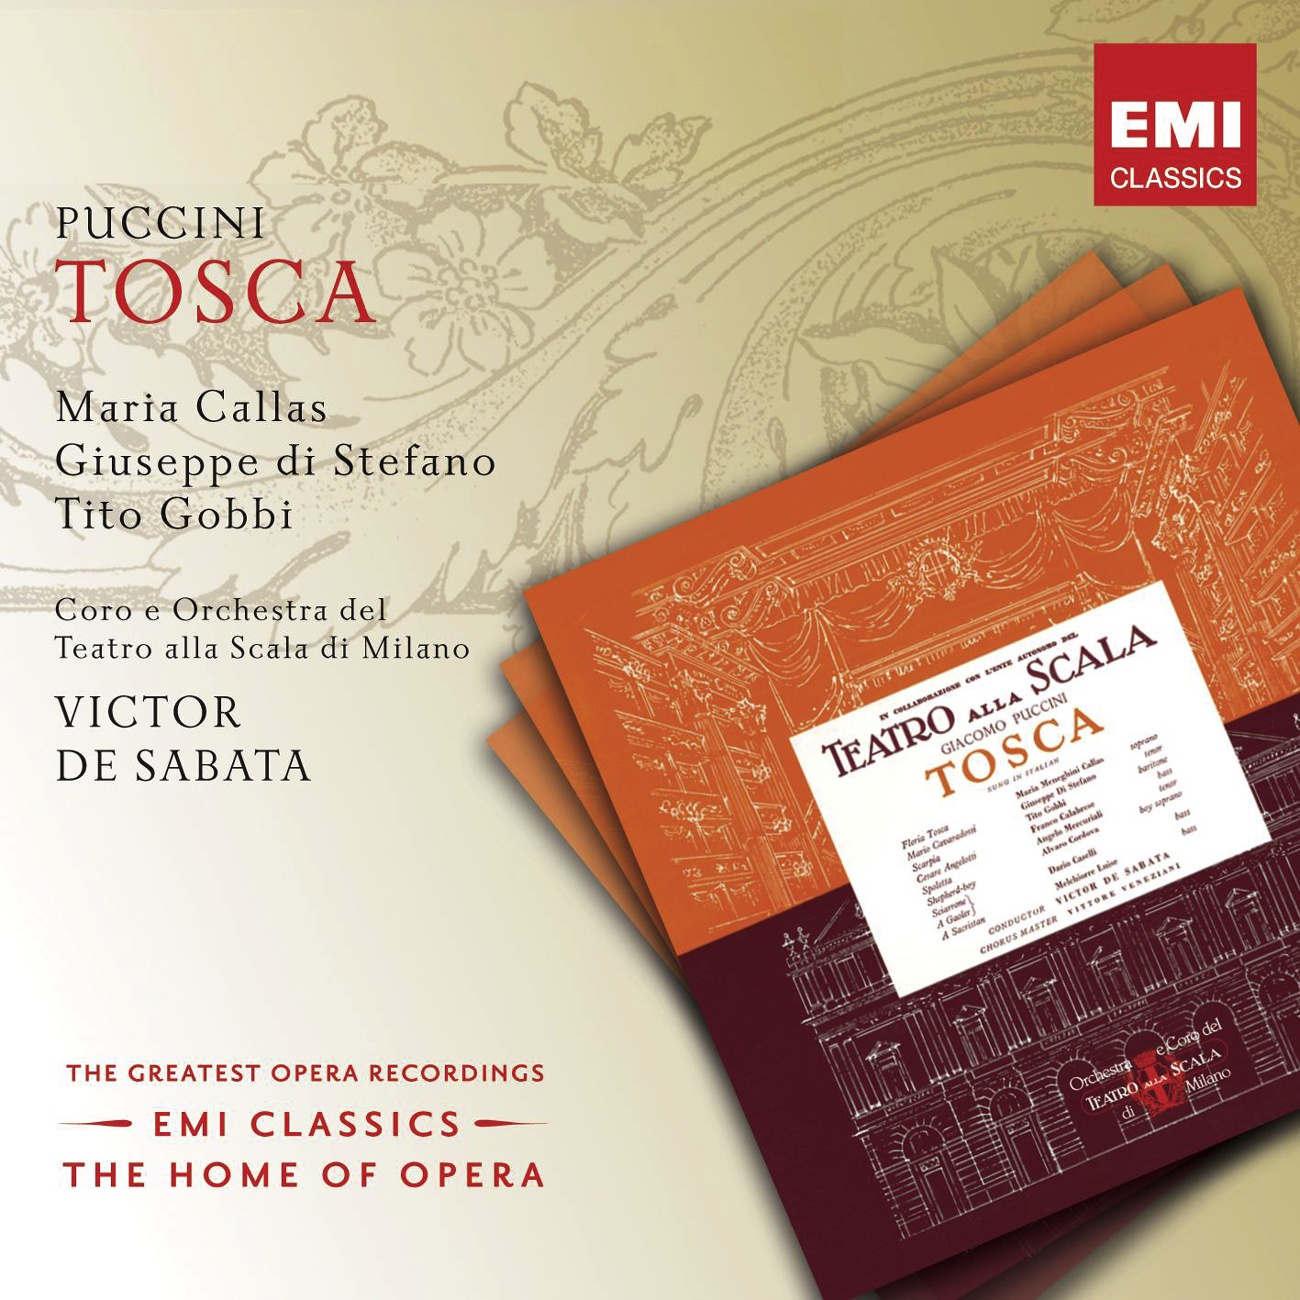 Tosca (2002 Digital Remaster), ACT TWO: Vissi d'arte (Tosca)